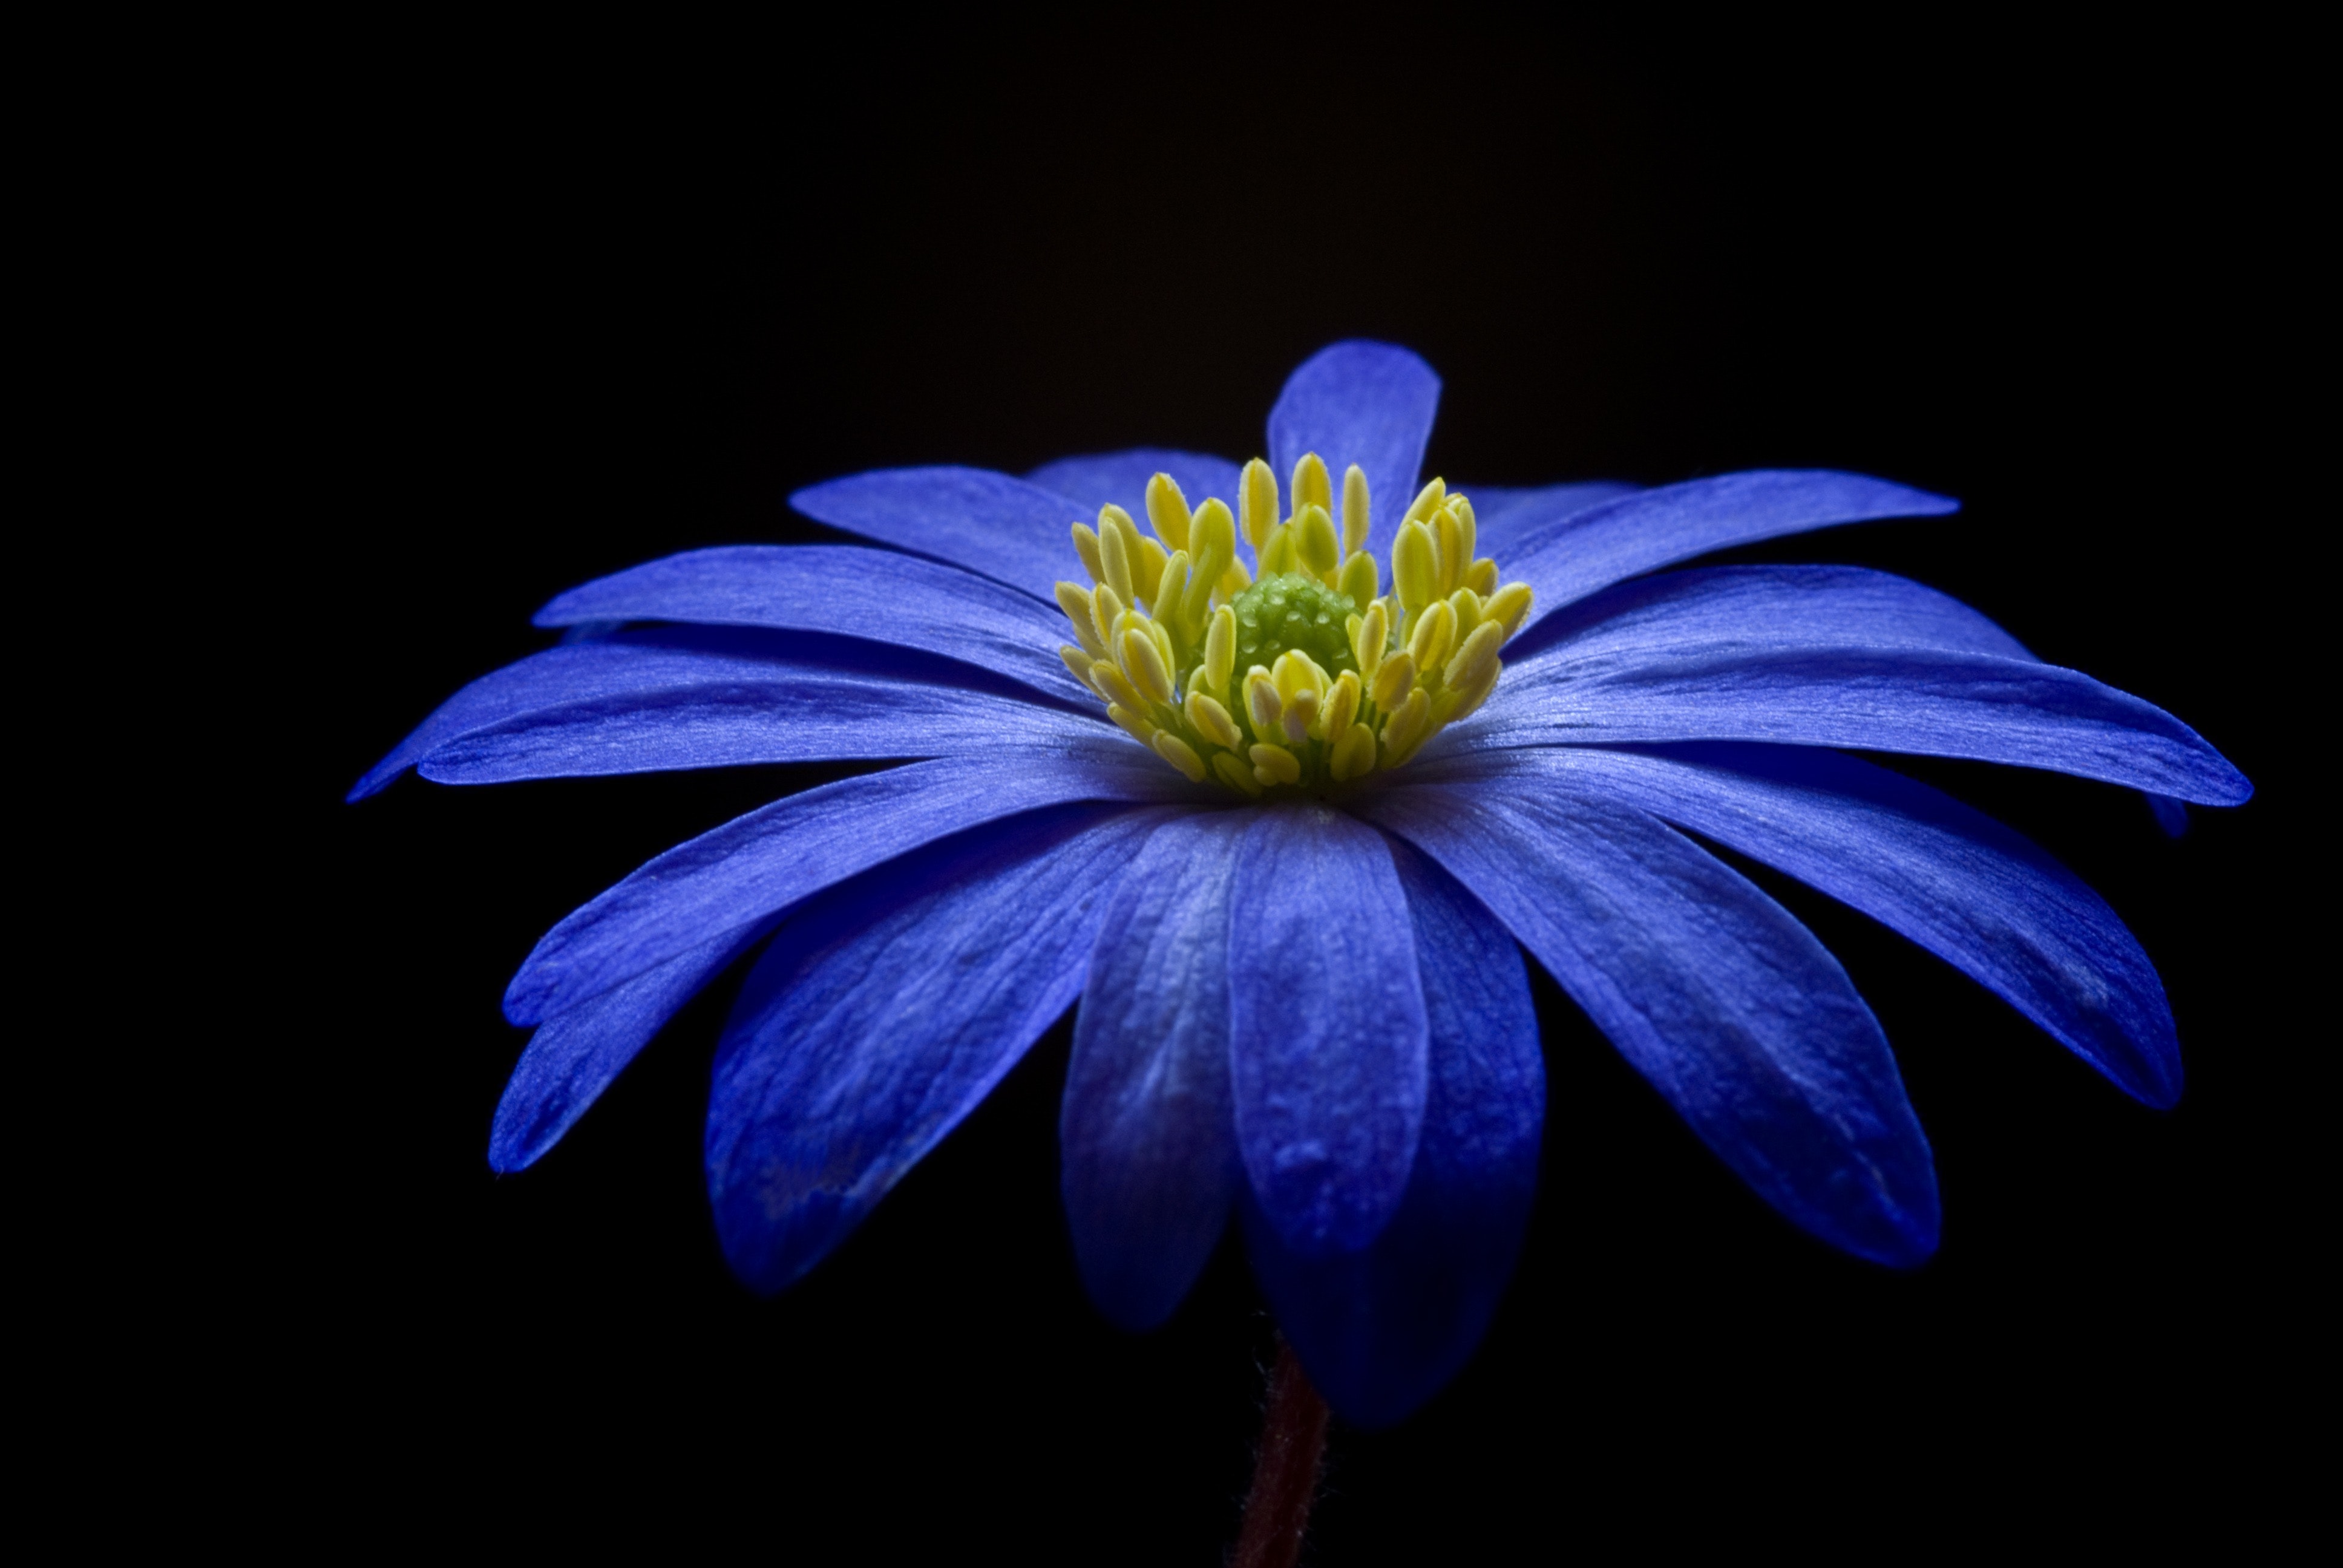 Blue yellow petaled flower photo